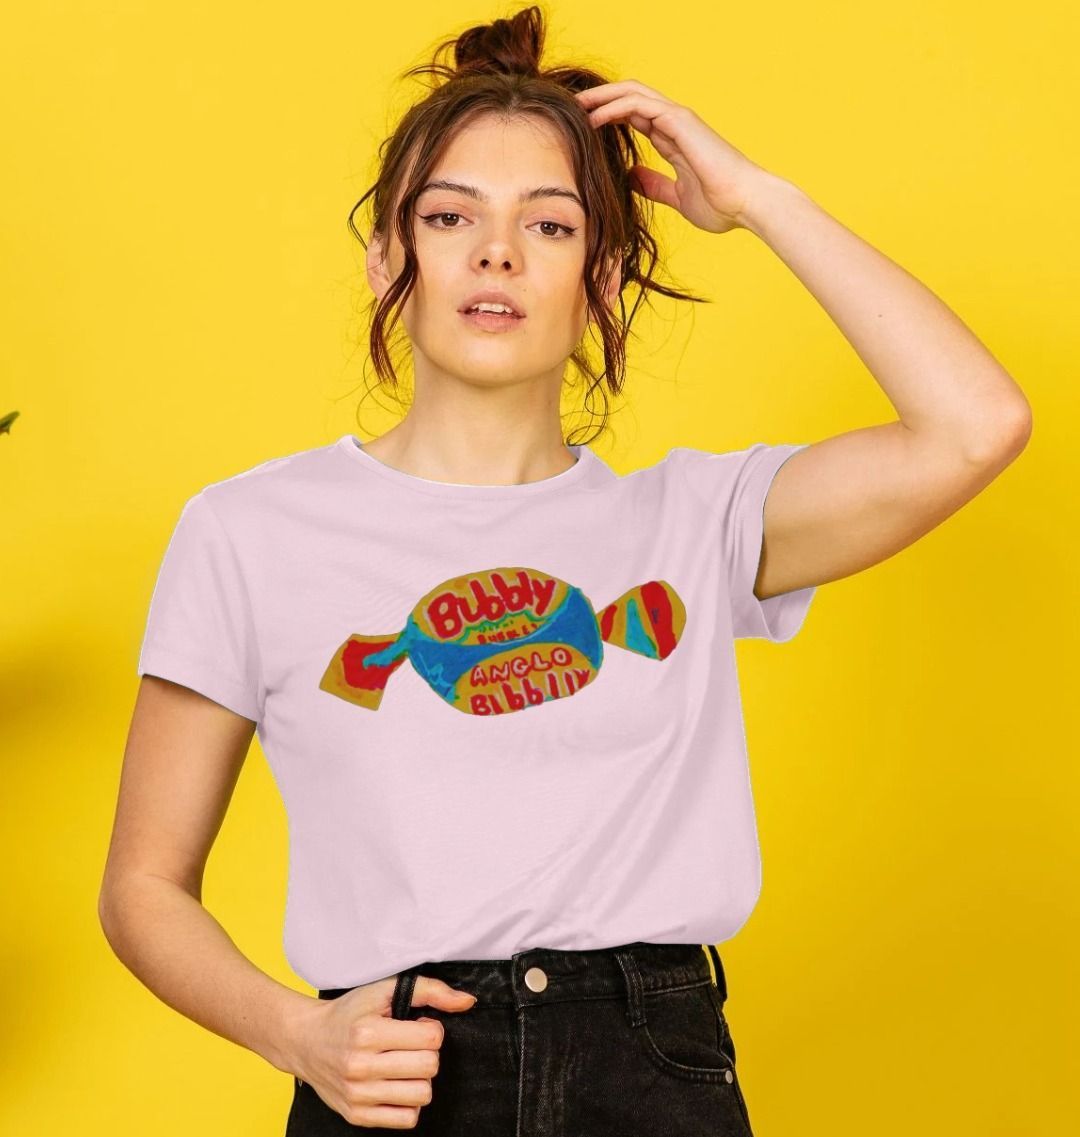 blowin' big bubbles organic women's tee - Printed T-shirt - Sarah Millin